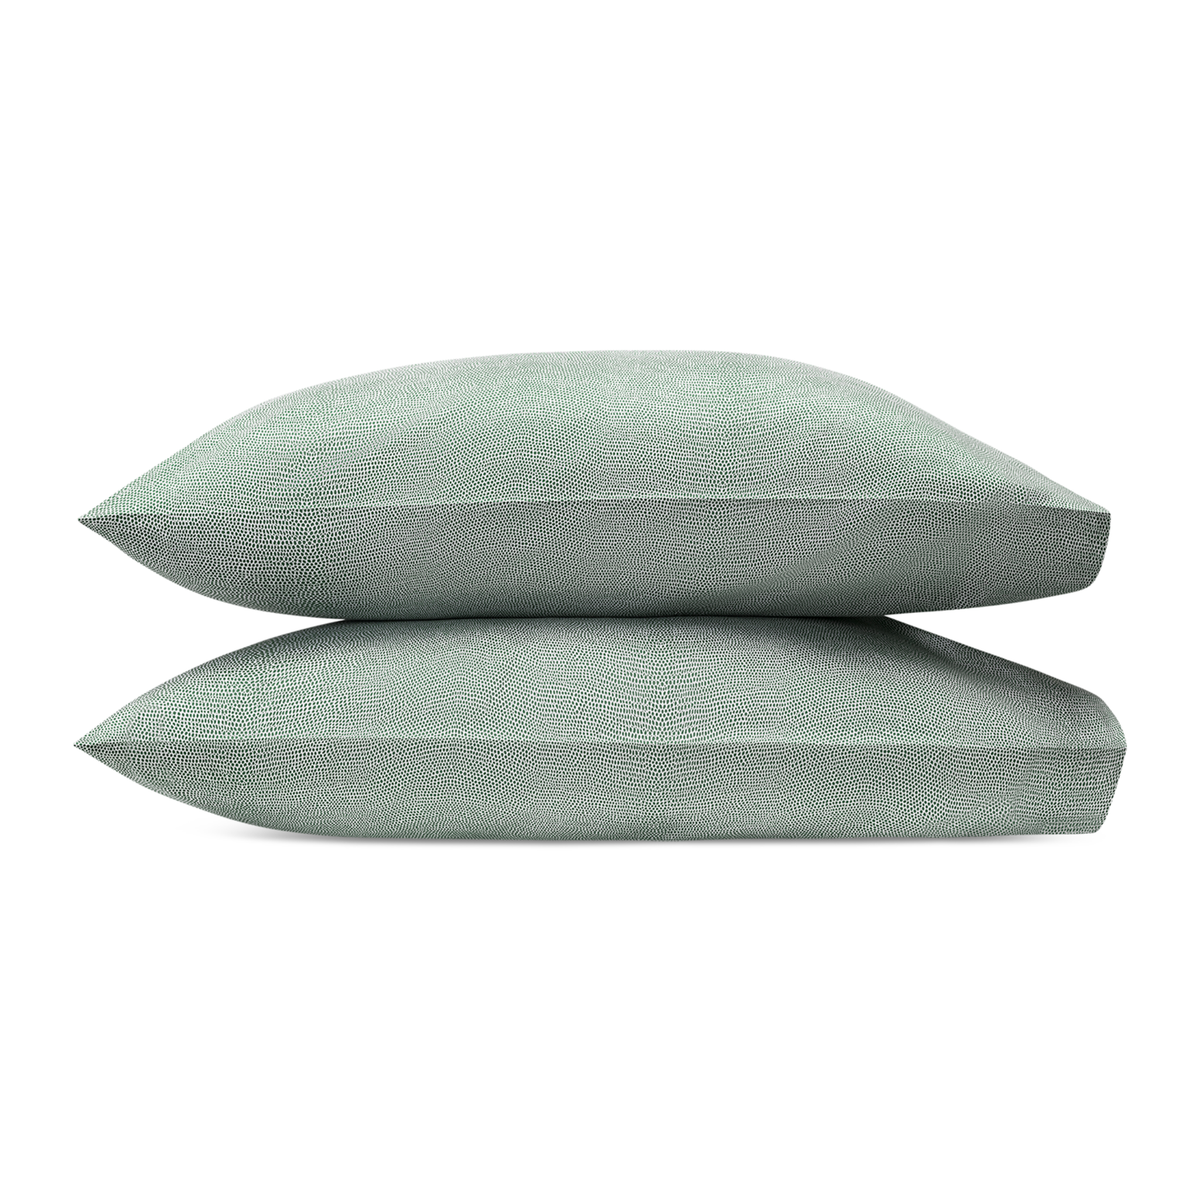 Pair of Pillowcases of Green Matouk Jasper Bedding